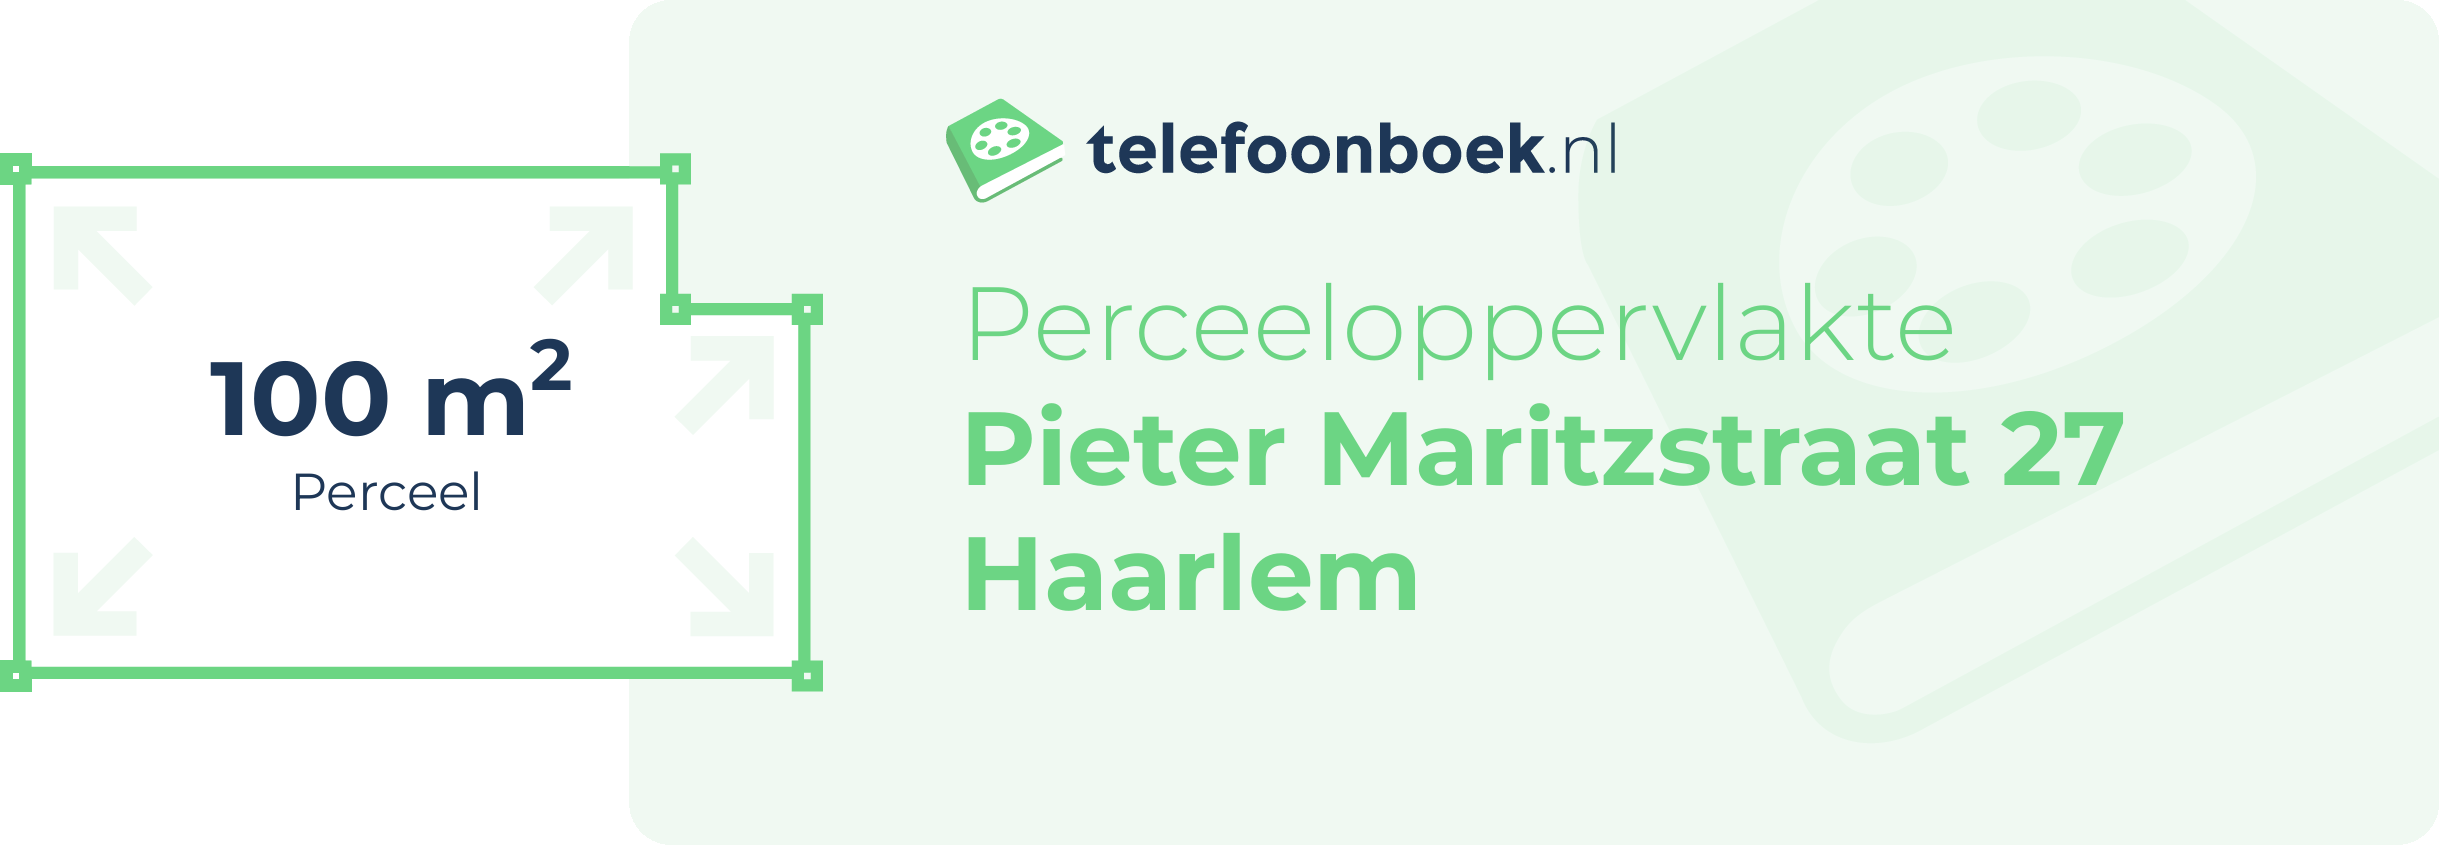 Perceeloppervlakte Pieter Maritzstraat 27 Haarlem